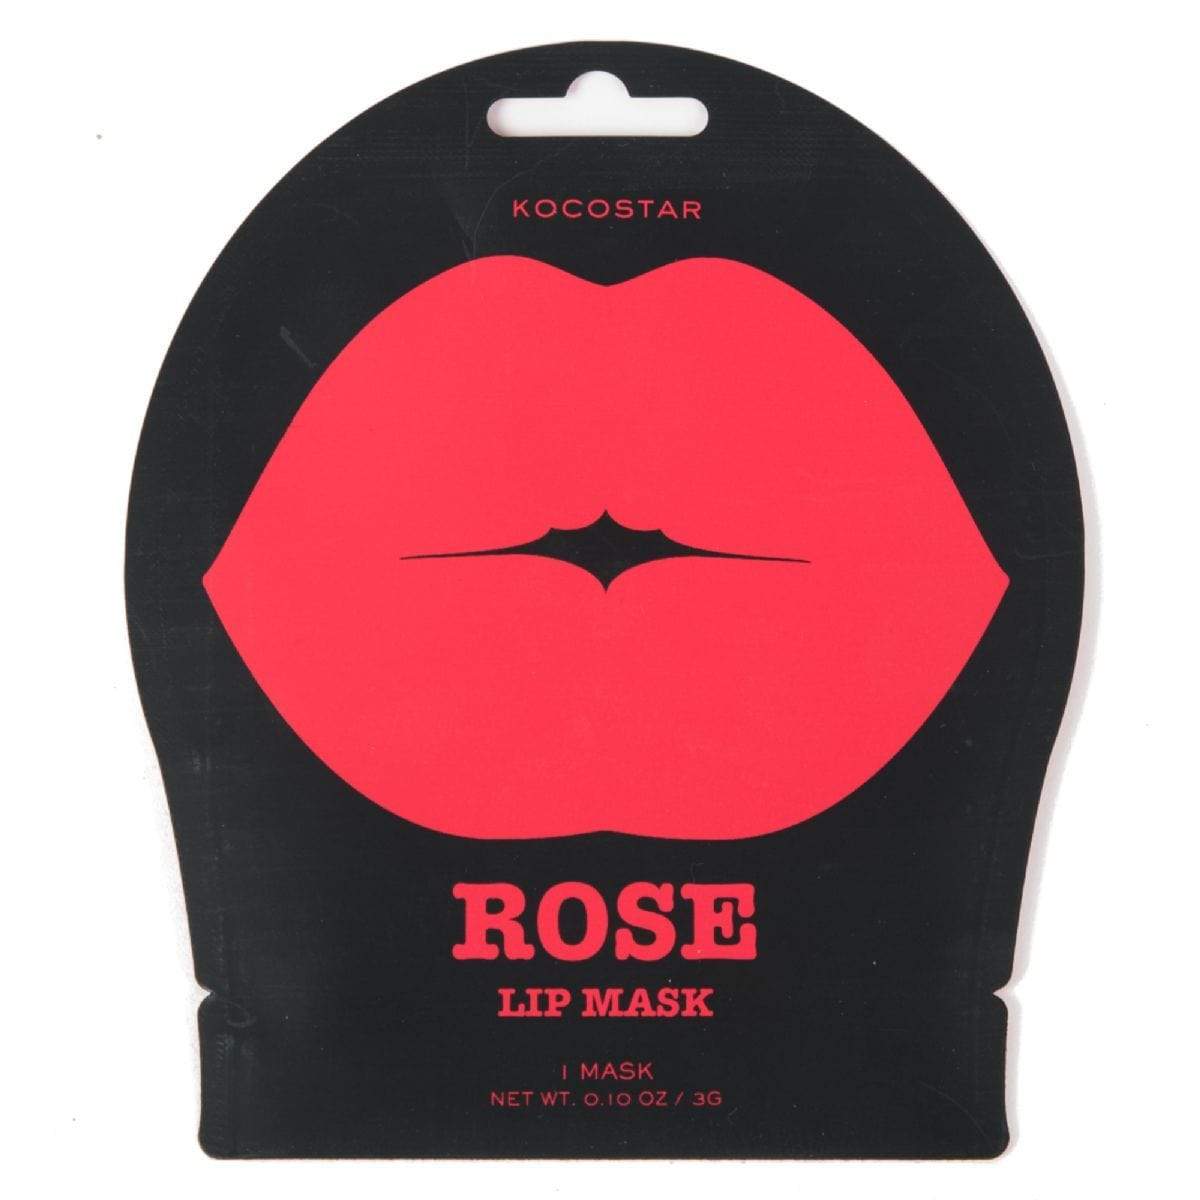 Kocostar Rose Lip Mask, lip mask, London Loves Beauty